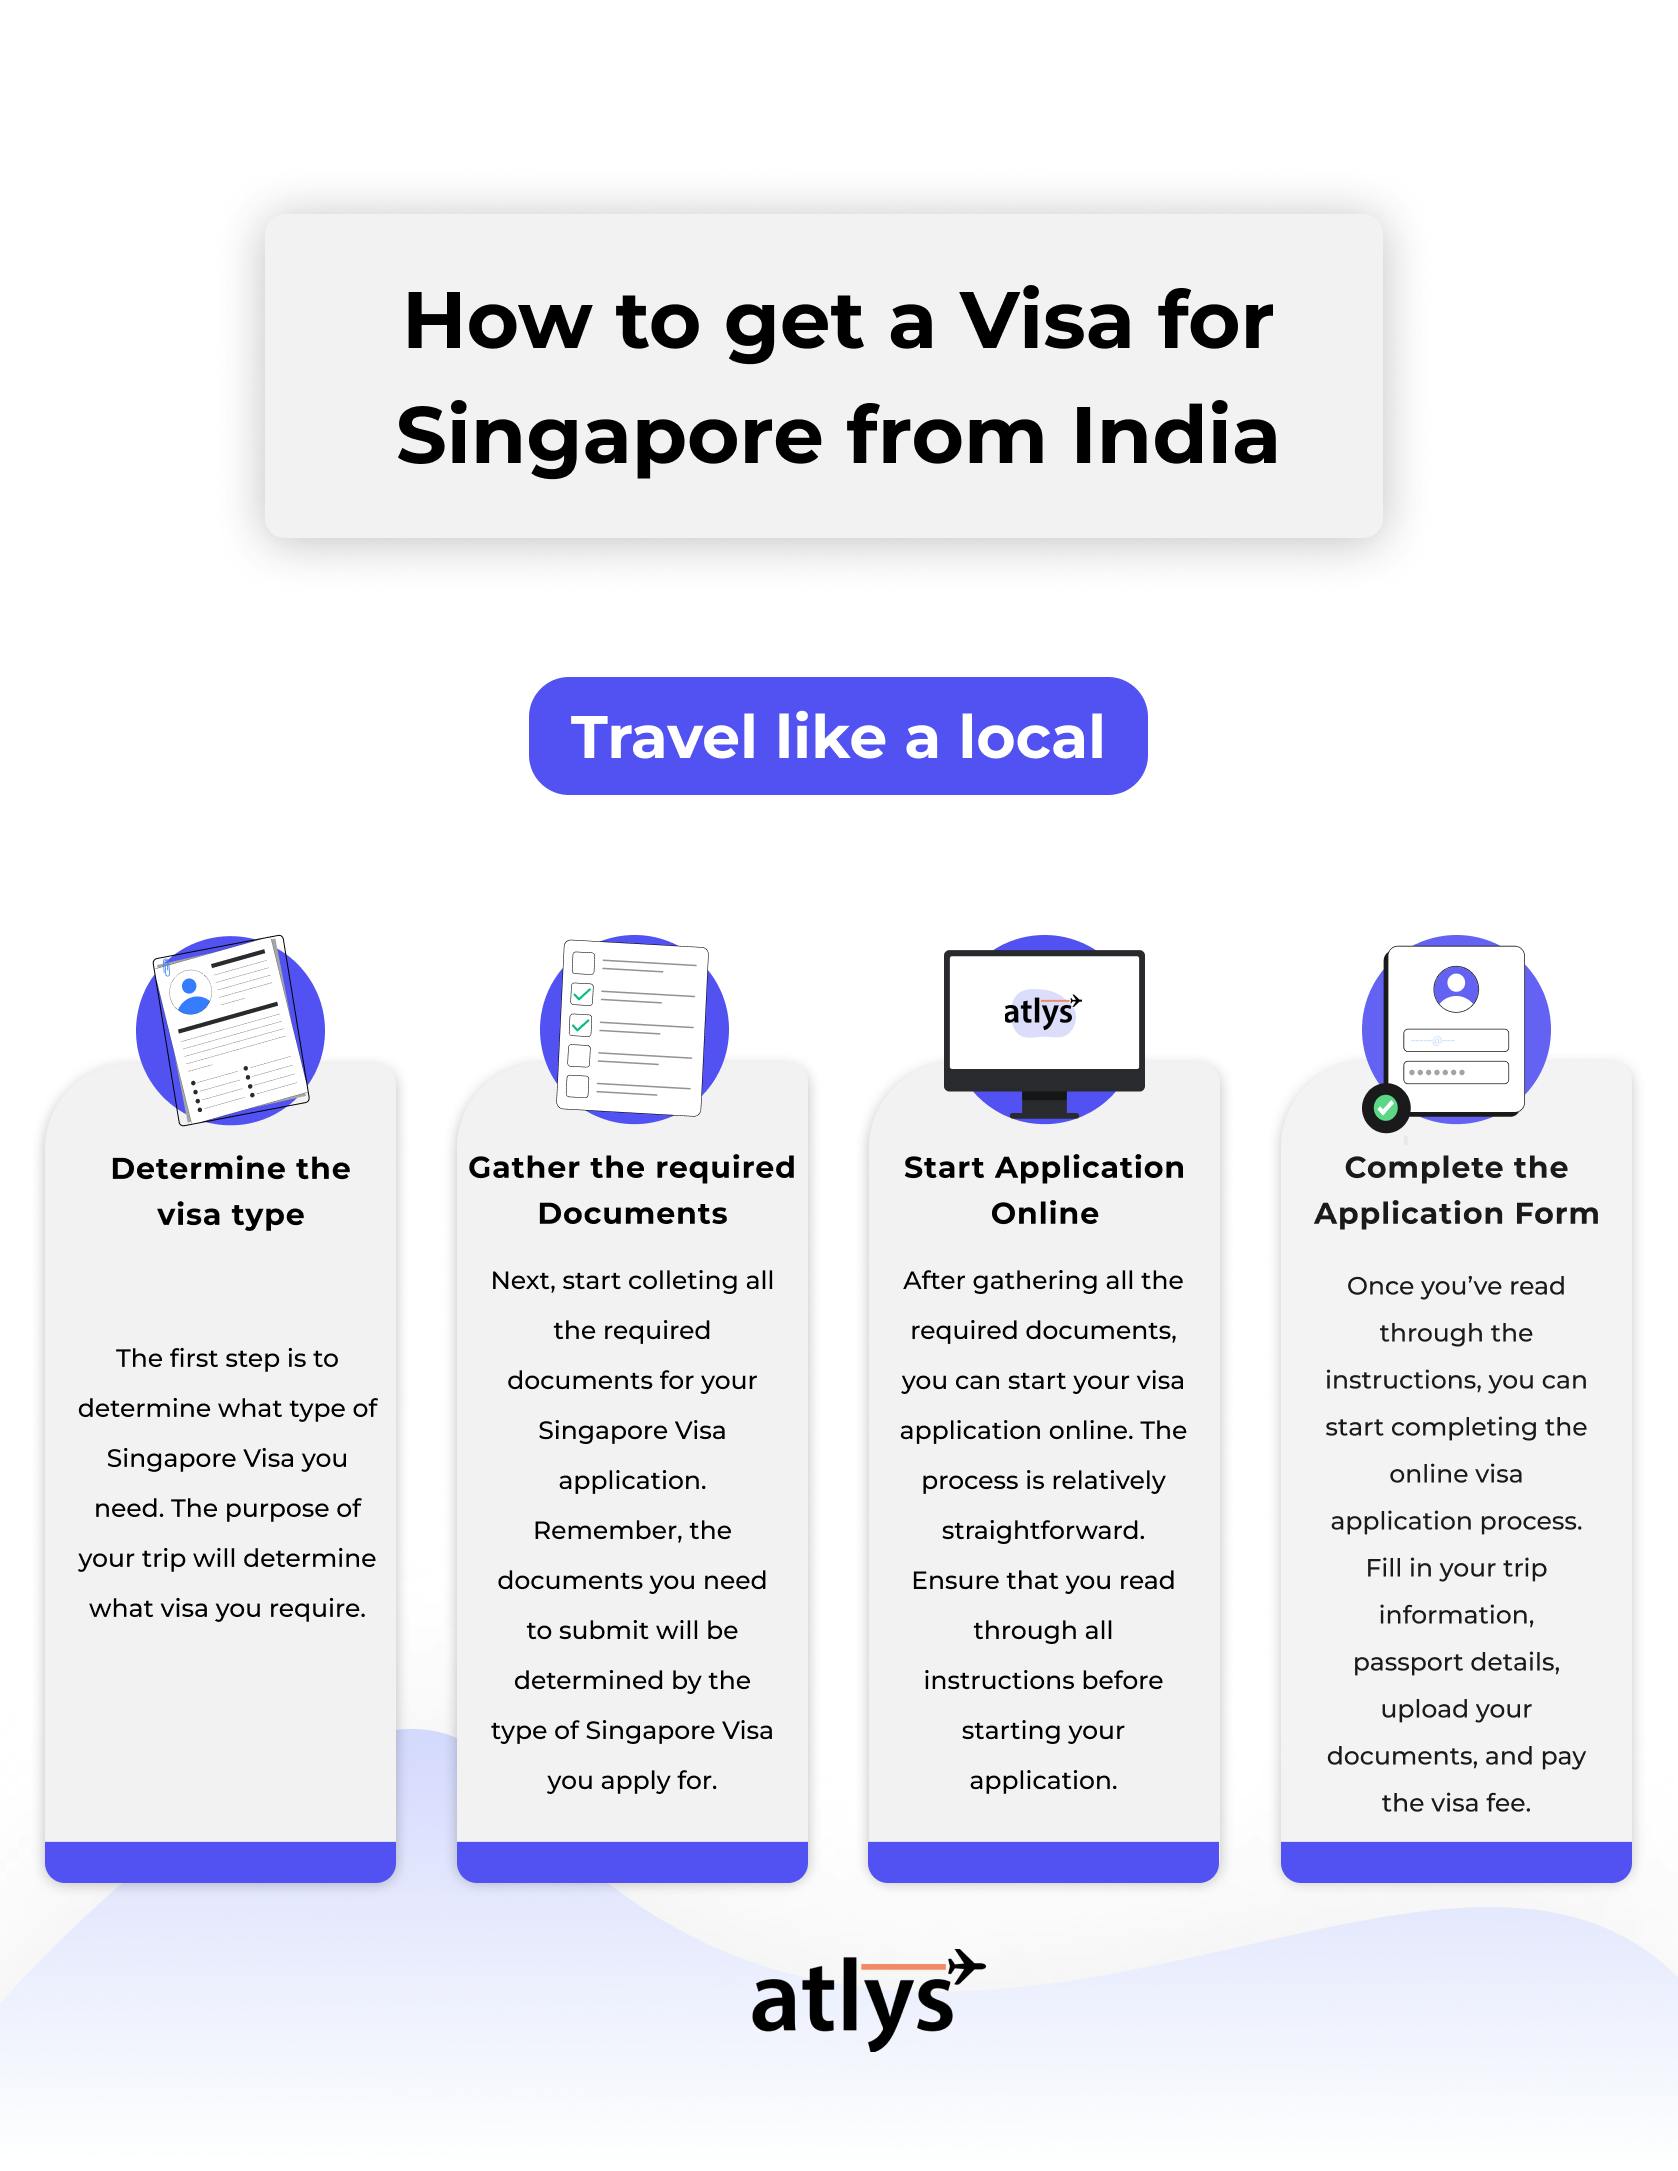 A screenshot showing how to get a Visa 